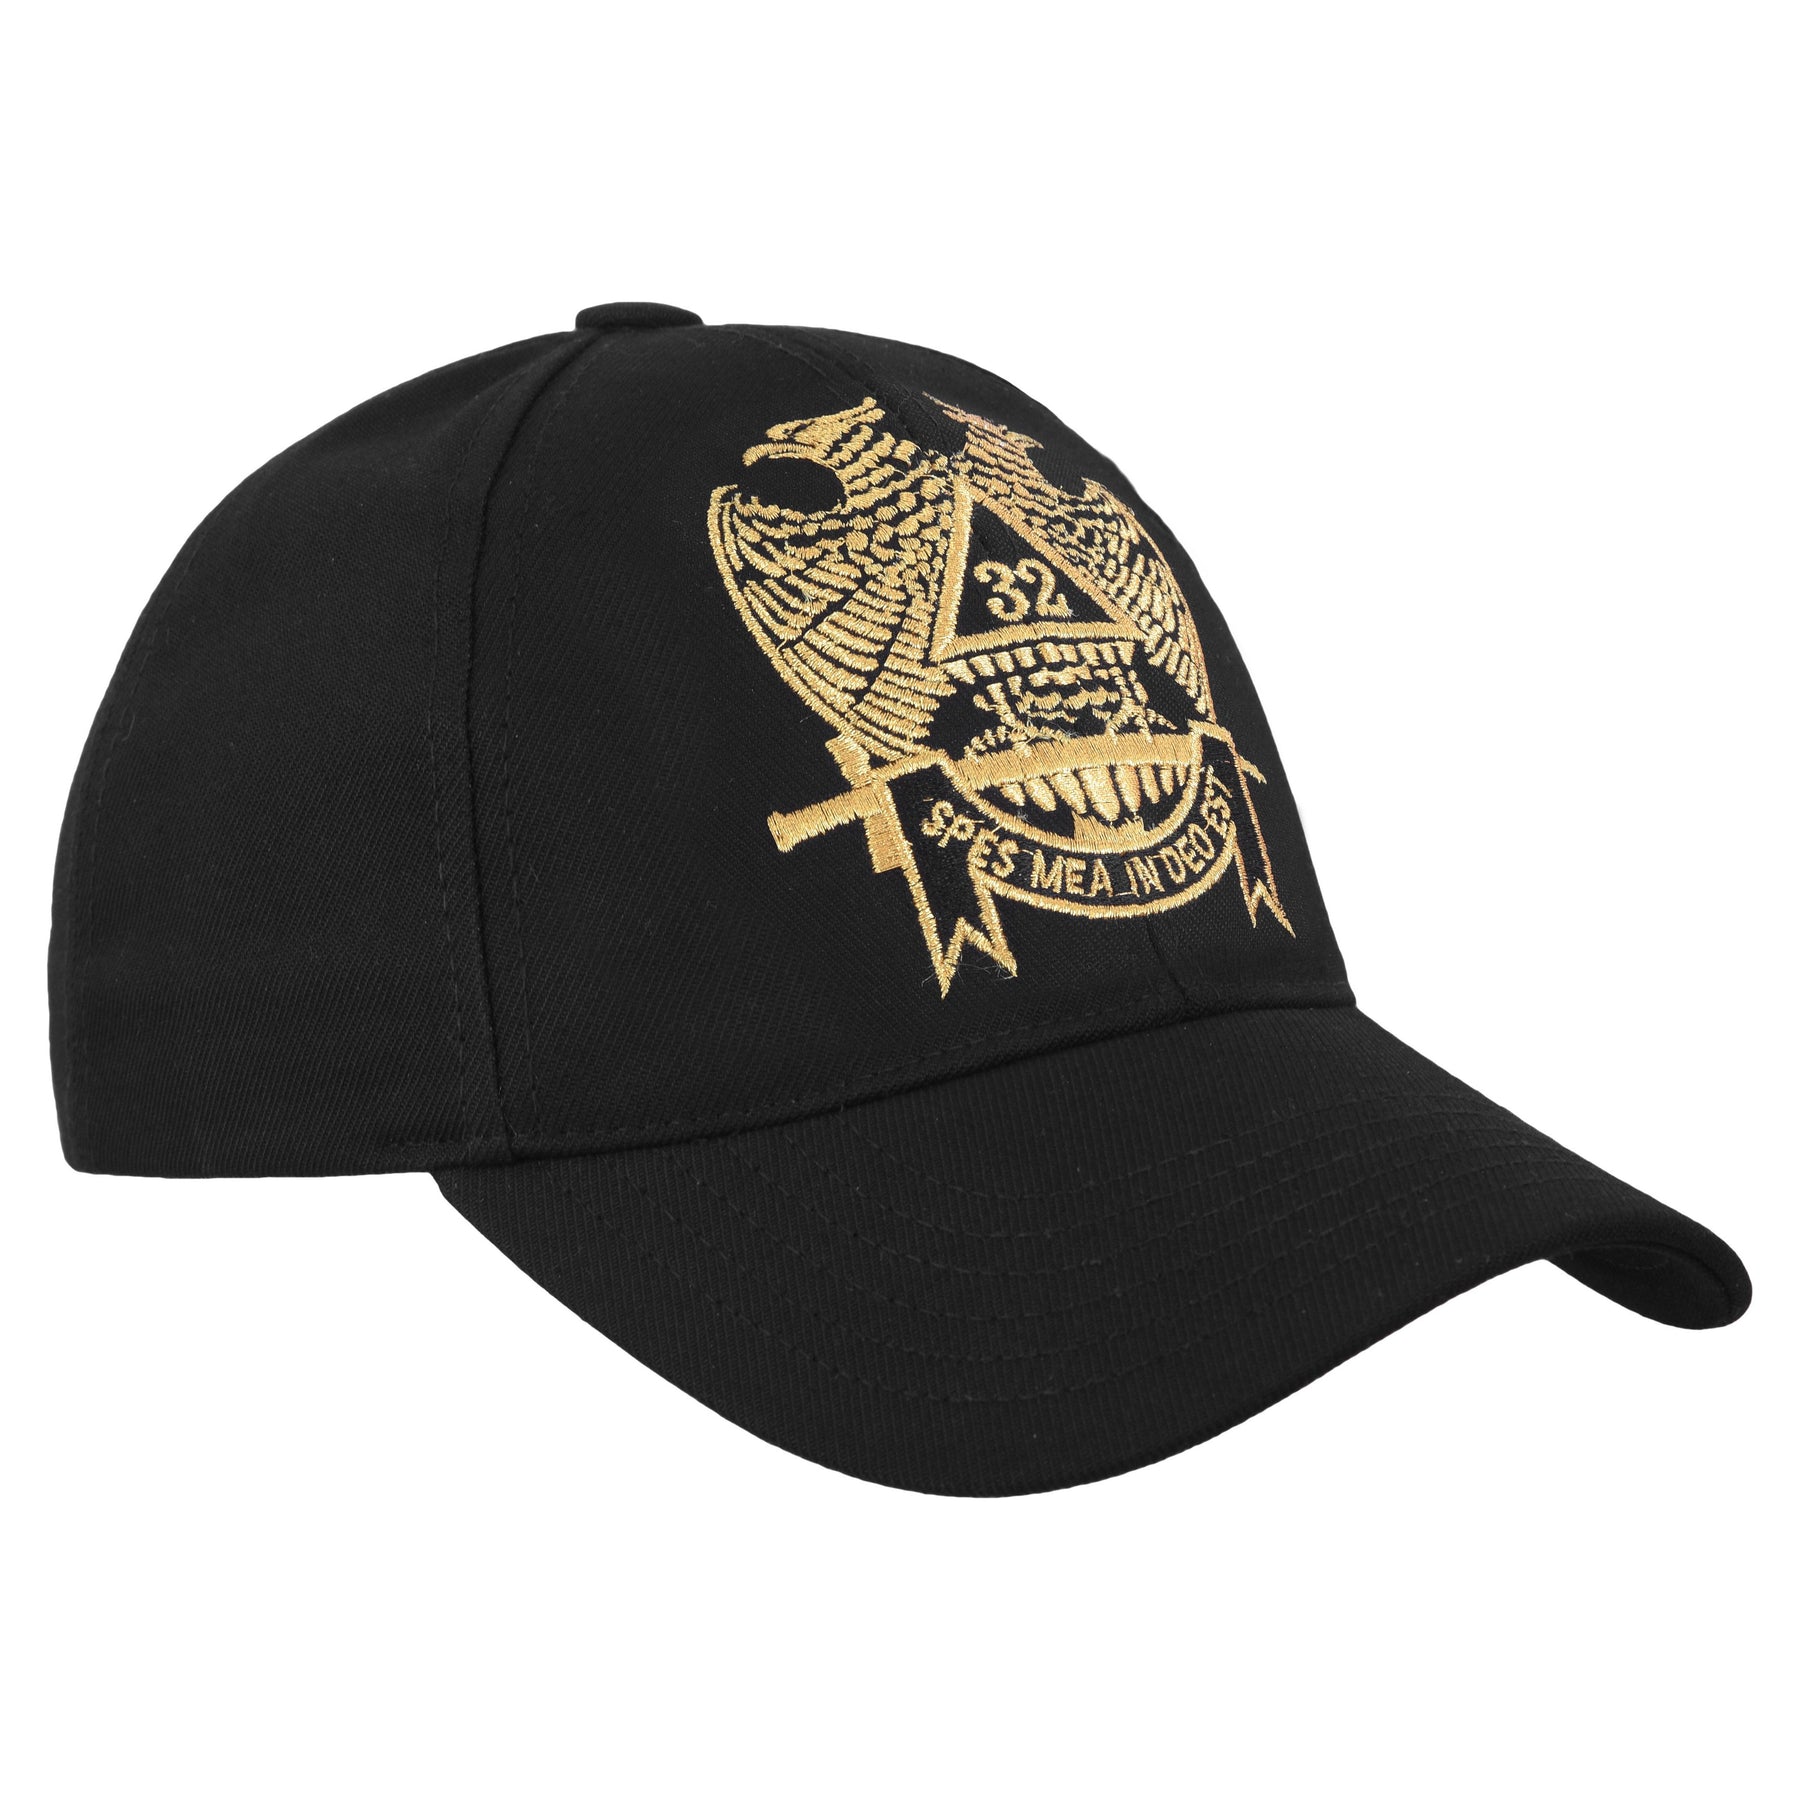 33rd Degree Scottish Rite Baseball Cap - Wings Down Black With Gold Embroidery - Bricks Masons